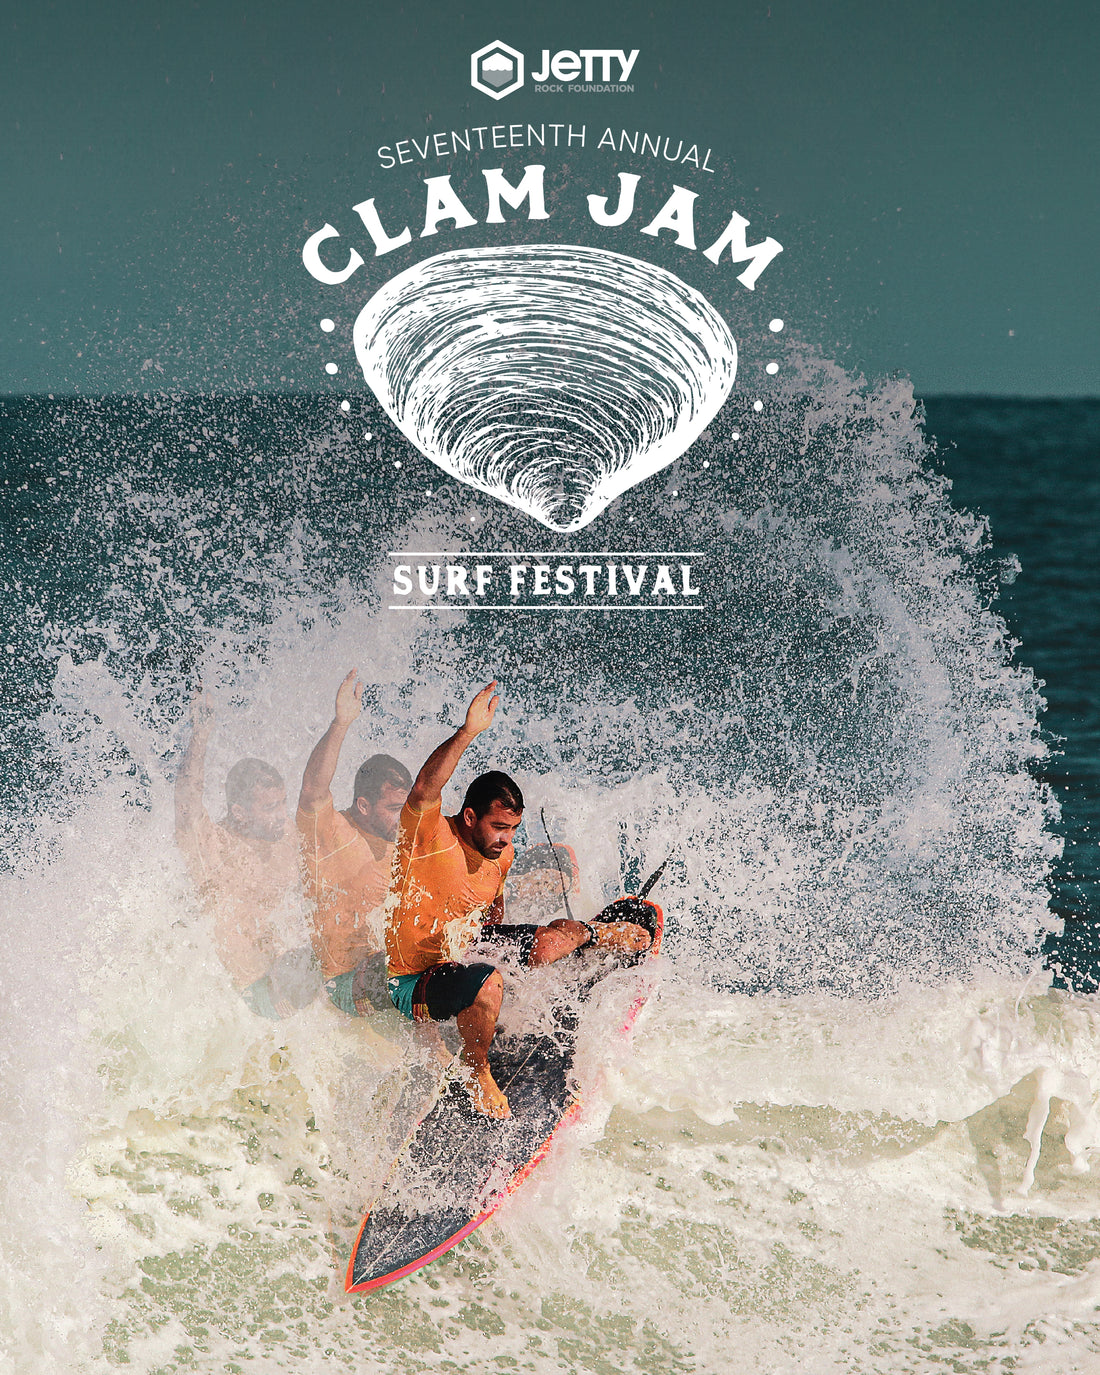 17th Annual Jetty Clam Jam